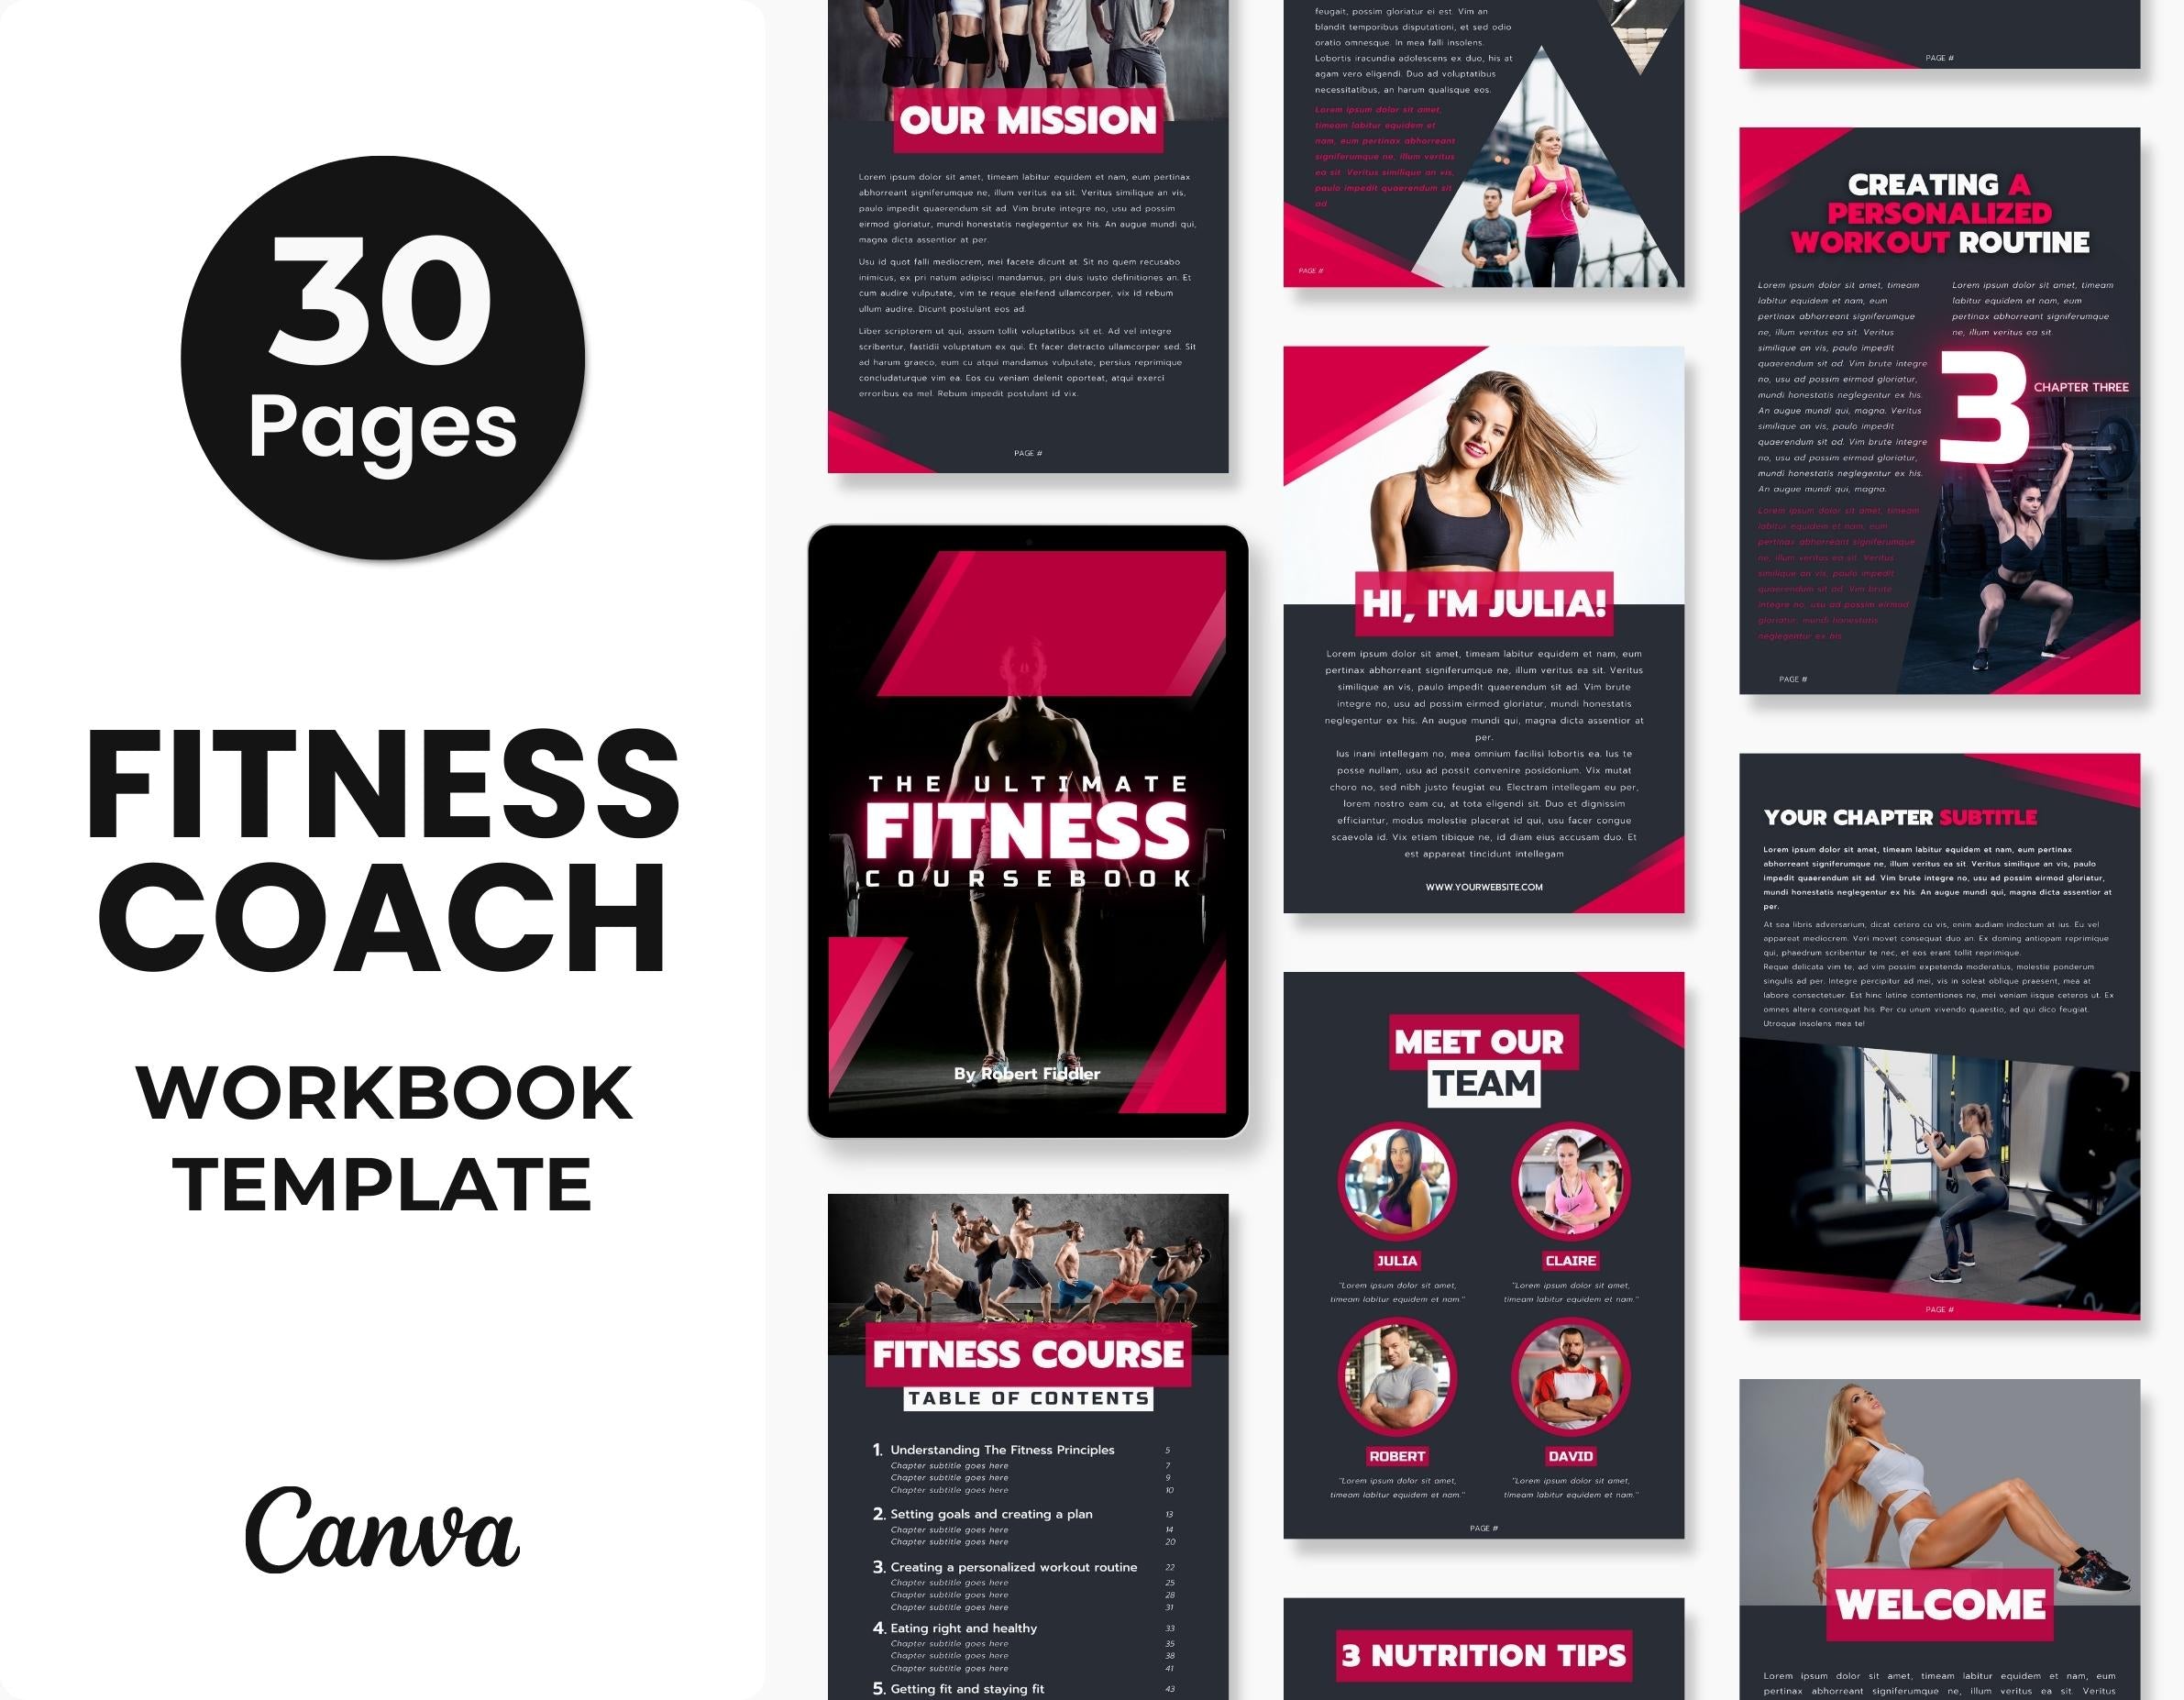 Fitness Coach Workbook Template Canva DigiPax